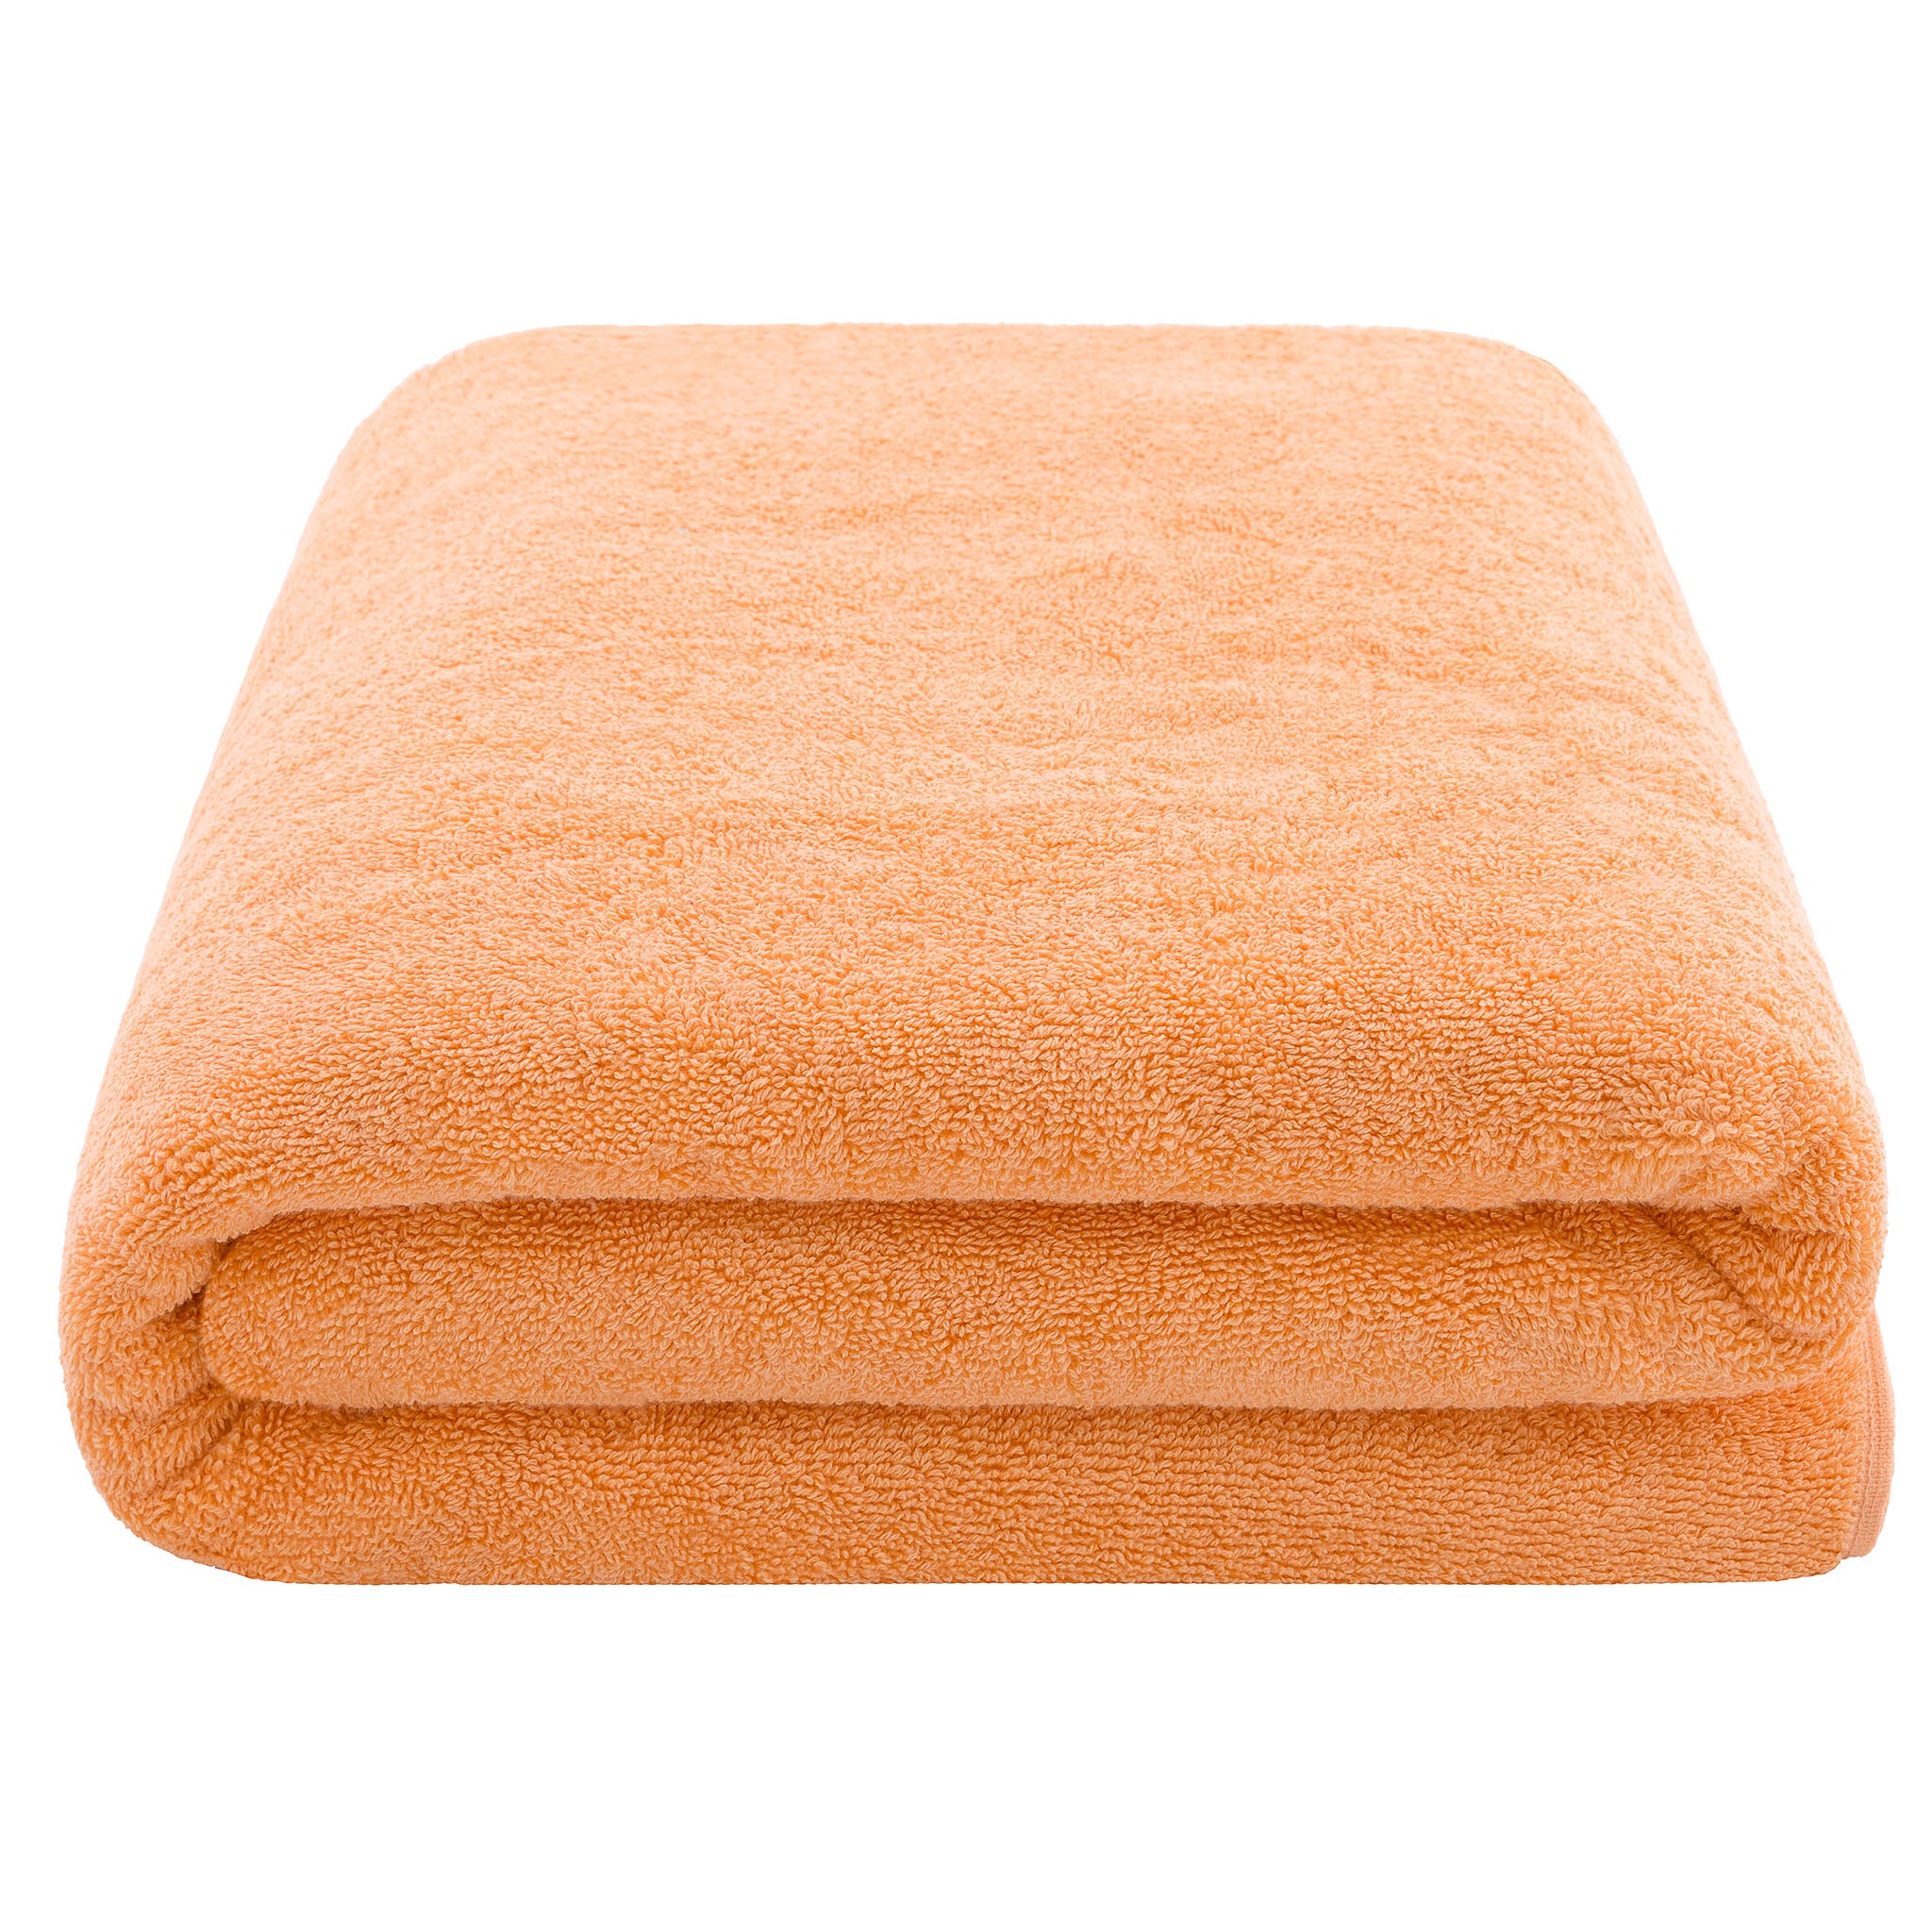 American Soft Linen 100% Ring Spun Cotton 40x80 Inches Oversized Bath Sheets malibu-peach-3